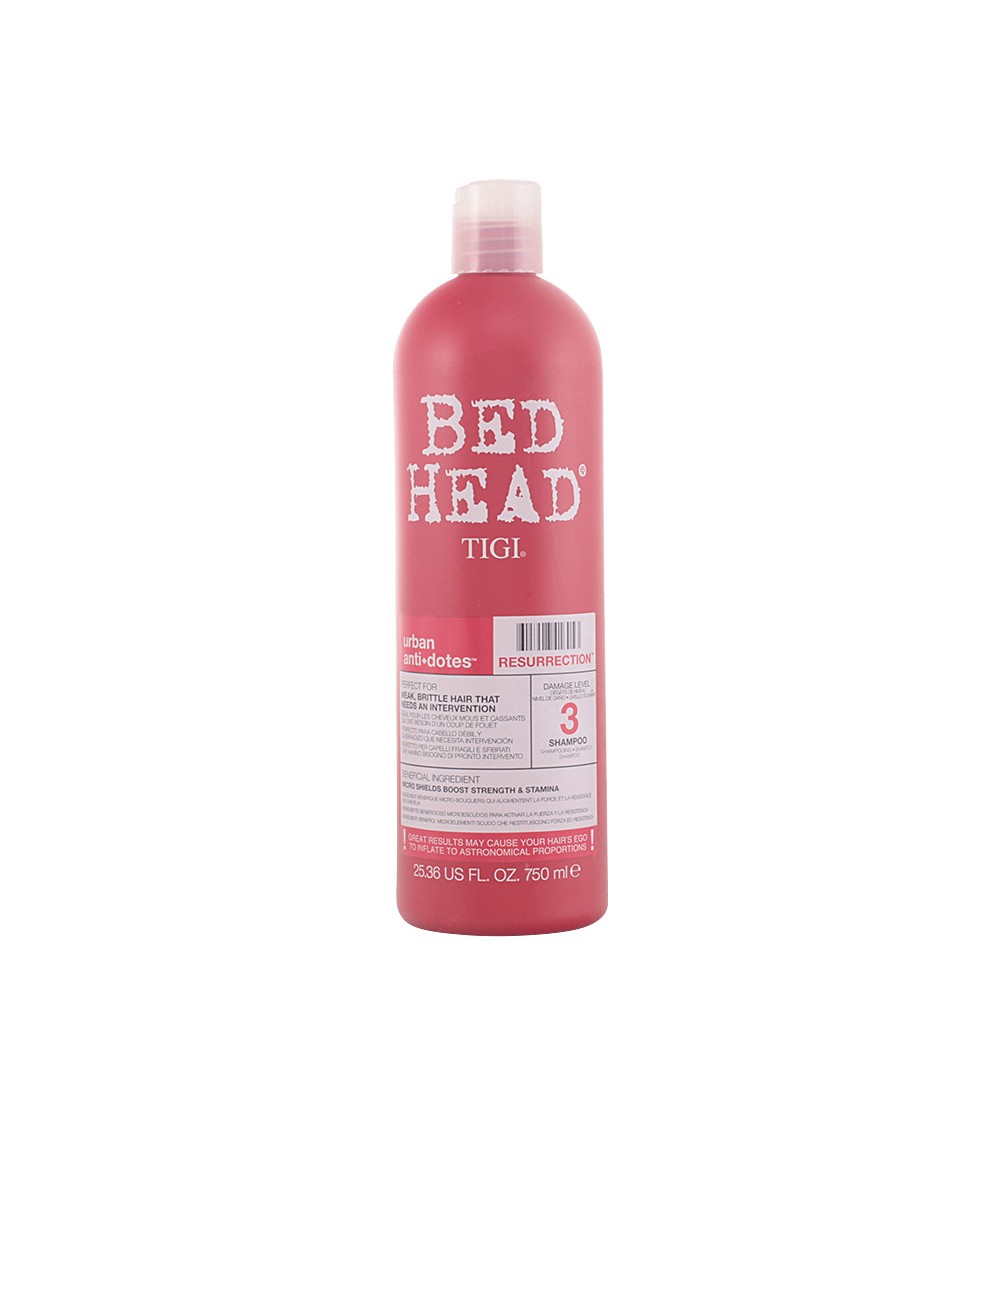 BED HEAD urban anti-dotes resurrection shampoo 750ml